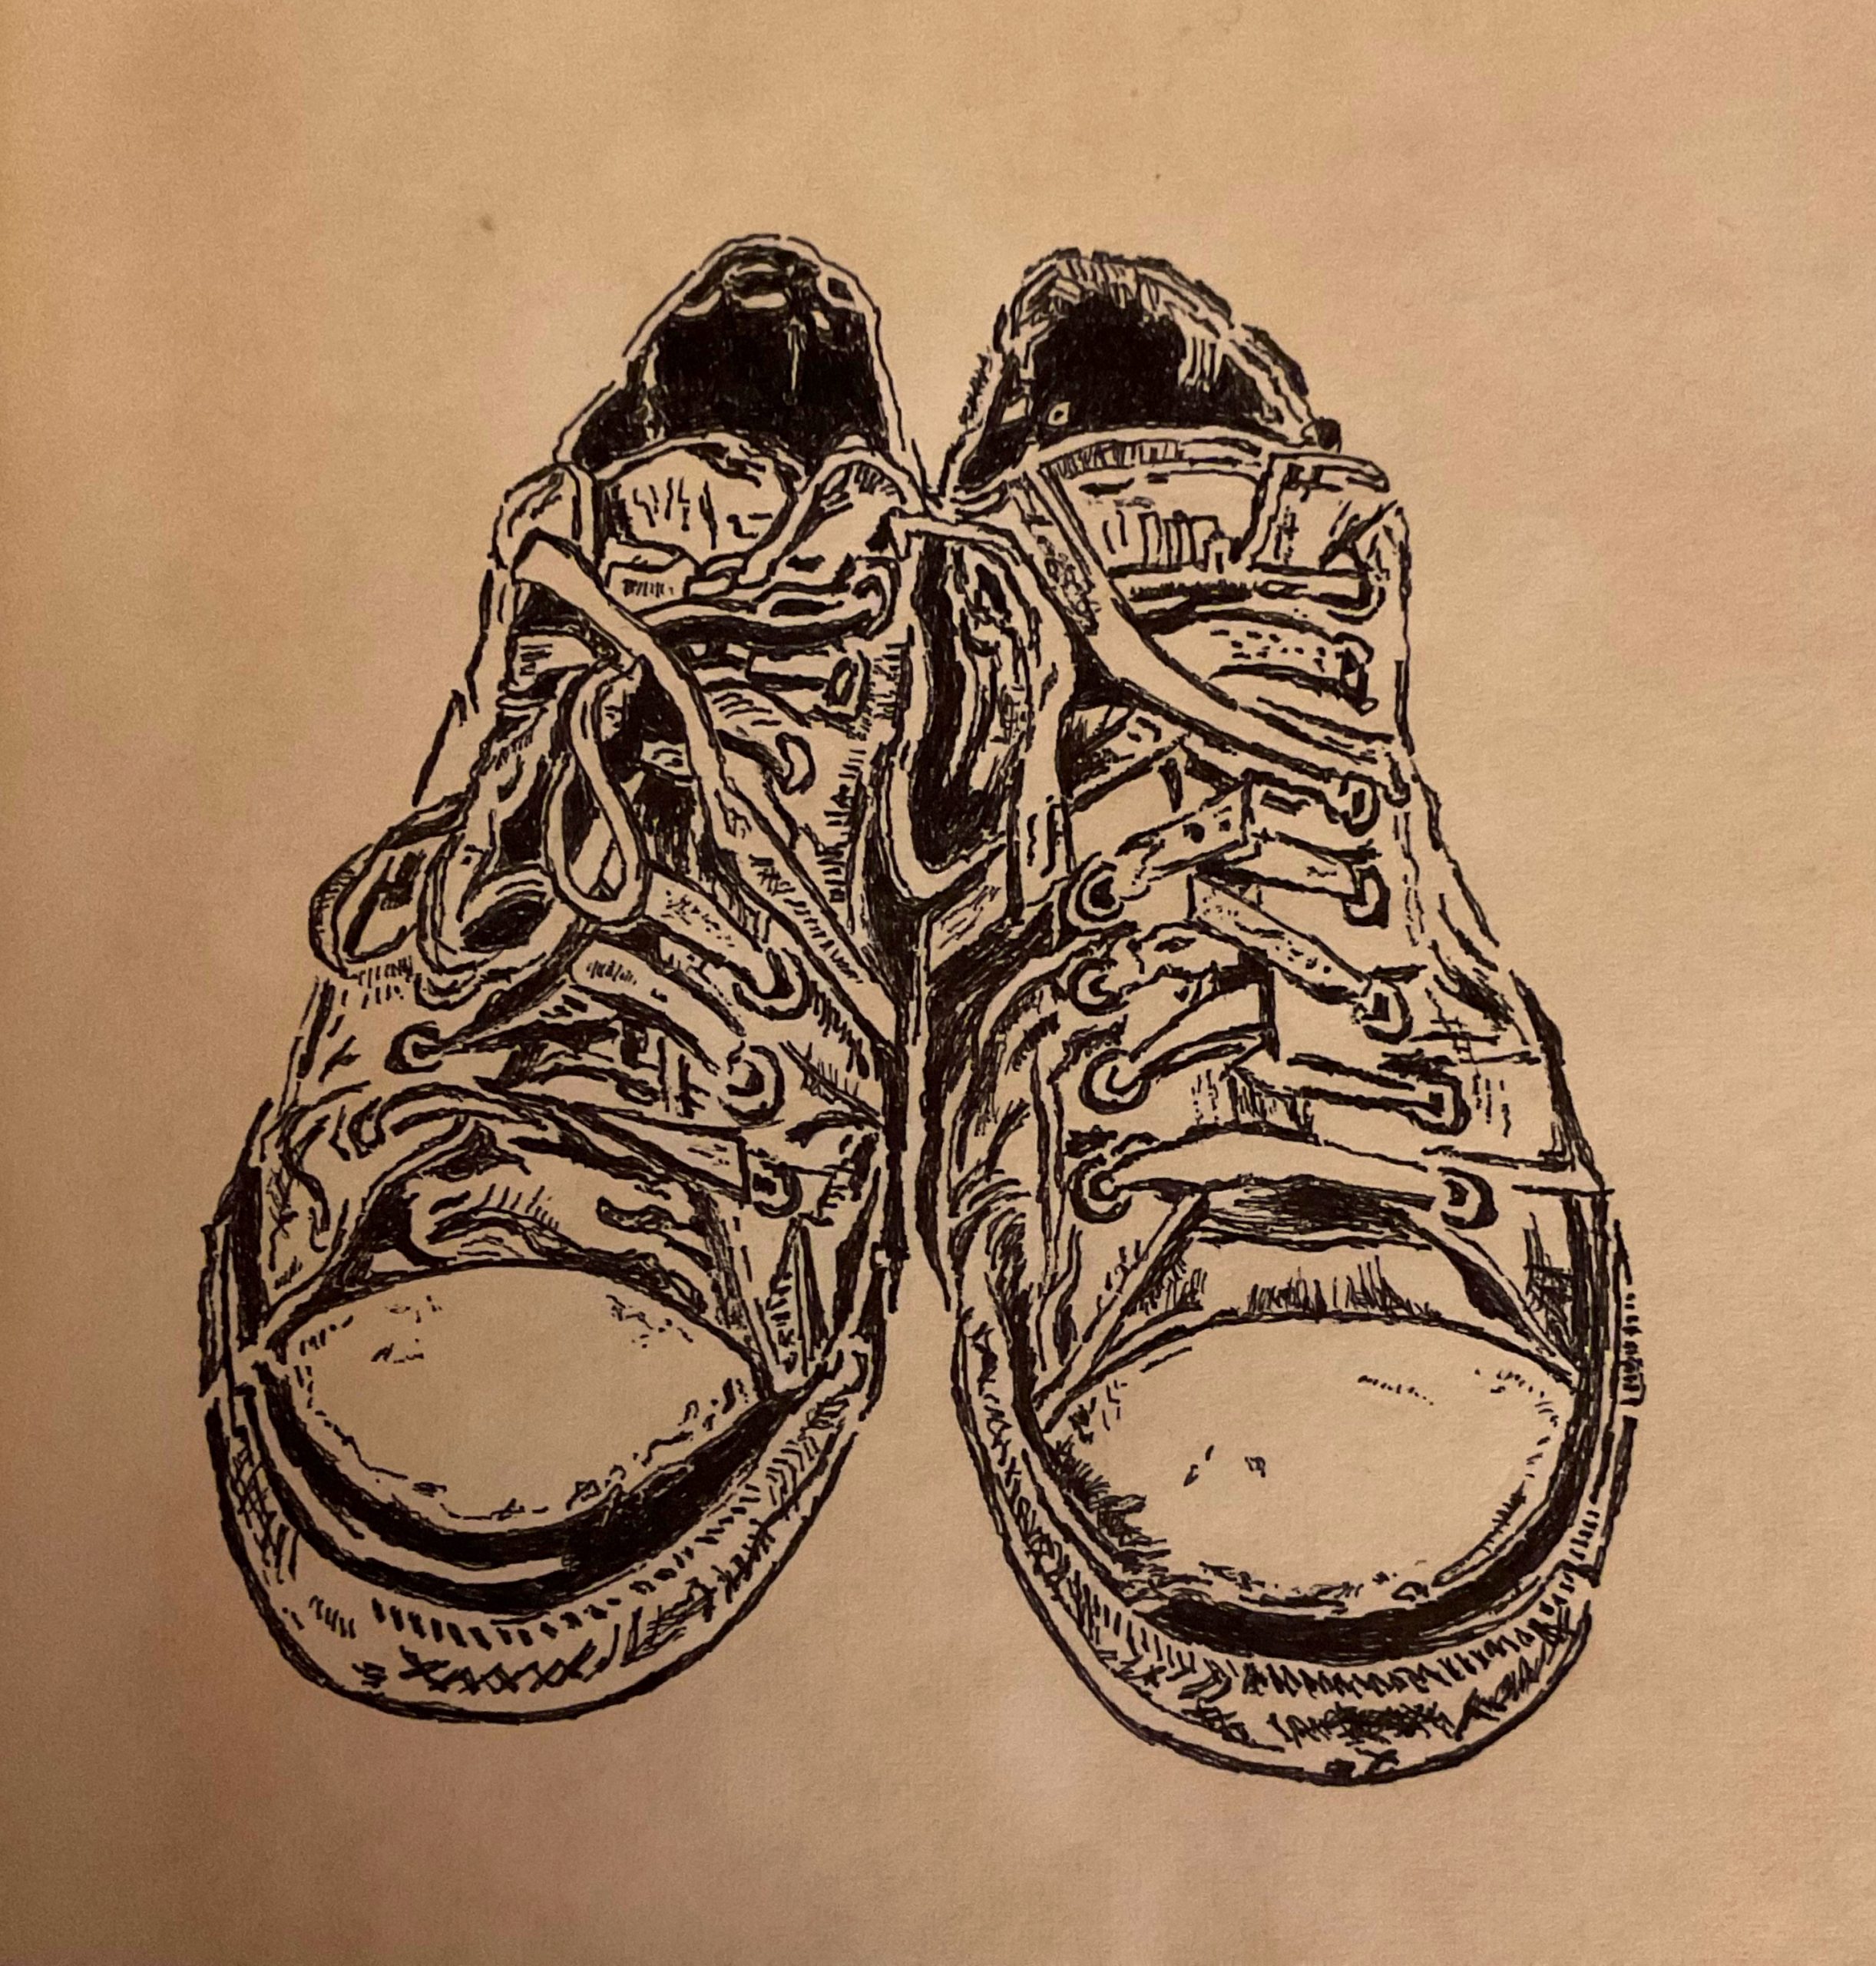 running shoes – progress made